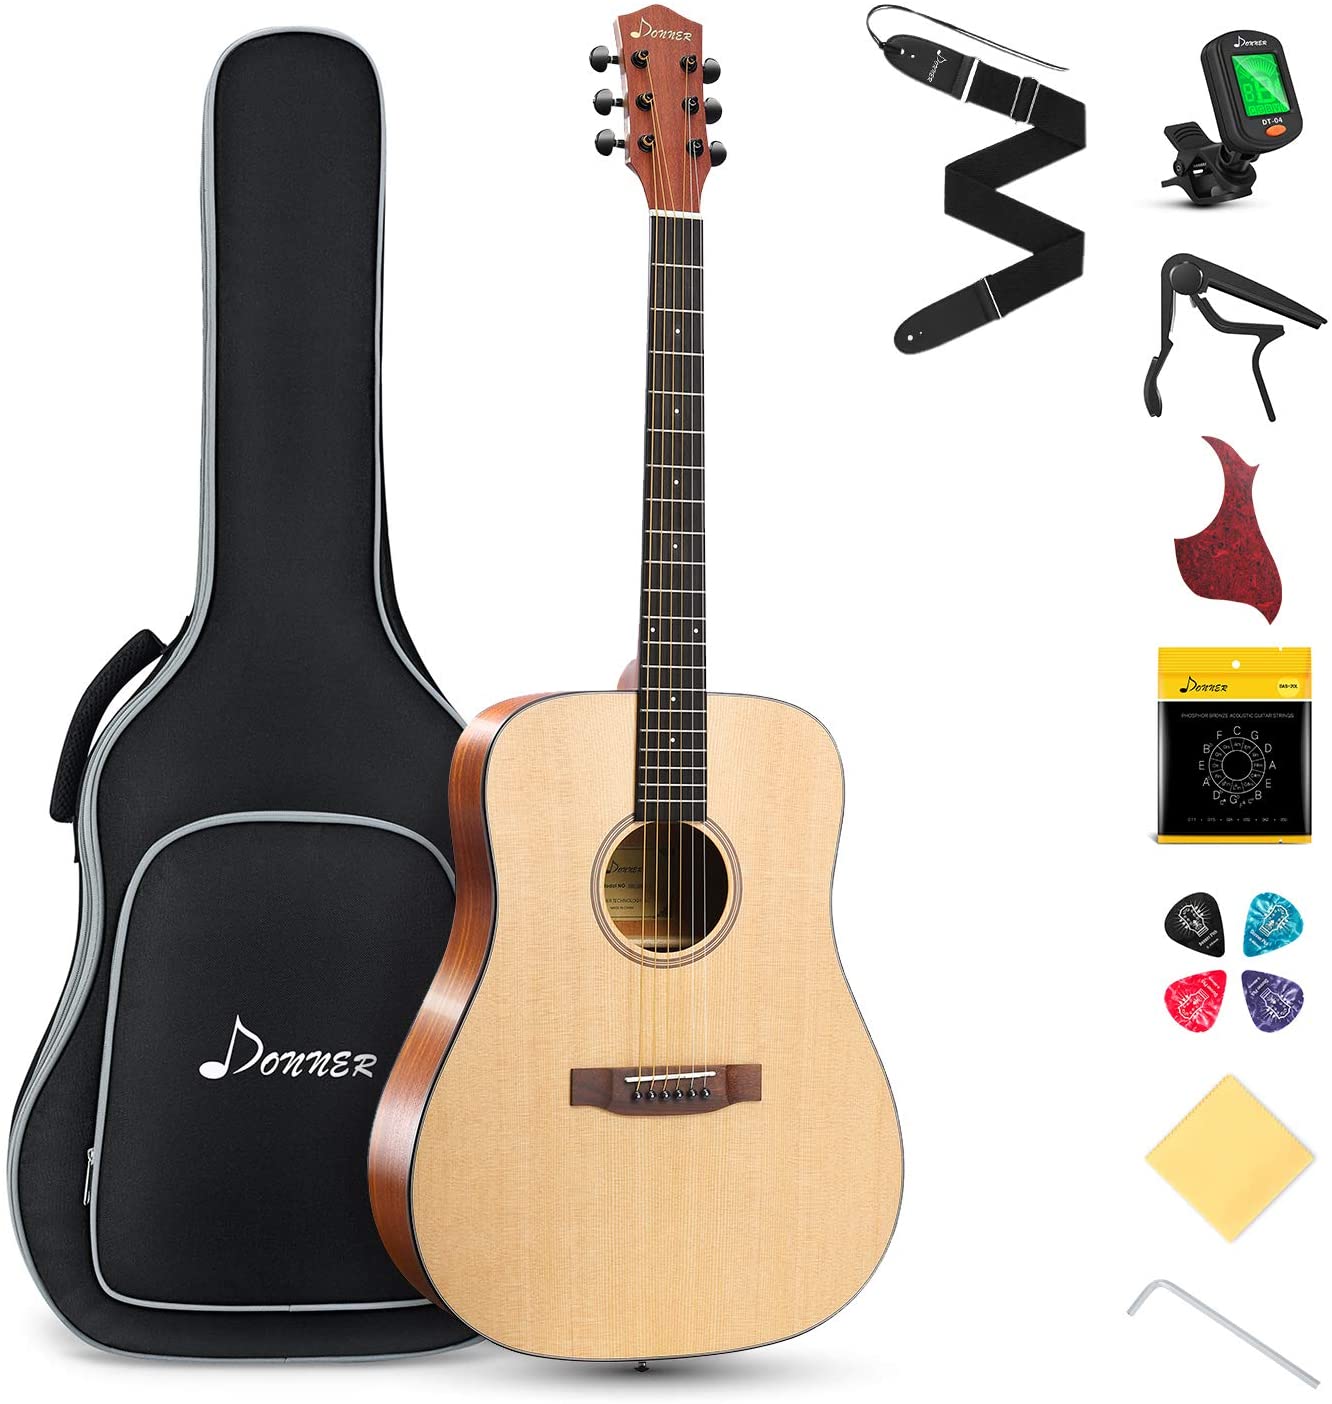 

Donner DAG-1 41-Inch Full-Size Acoustic Guitar Beginner Kit, Right Handed, Natural Finish